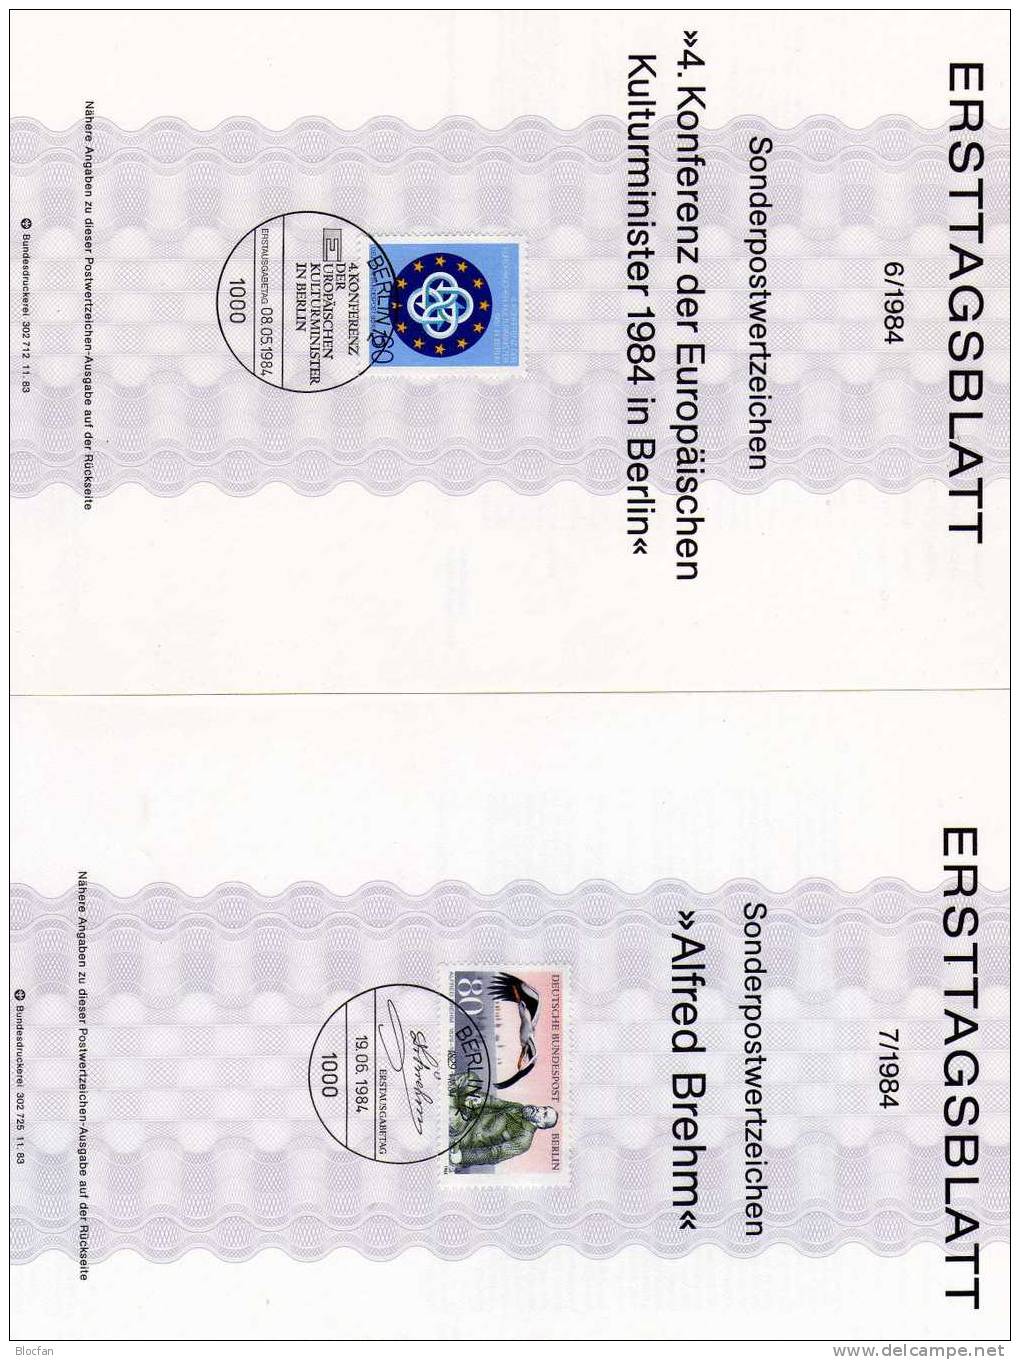 Jahrgang 1984 ETB Museums-Kunst Bis Weihnachten Berlin 708-729 SST 26€ Berliner Ersttagsblatt Document From Germany - Lots & Kiloware (min. 1000 Stück)